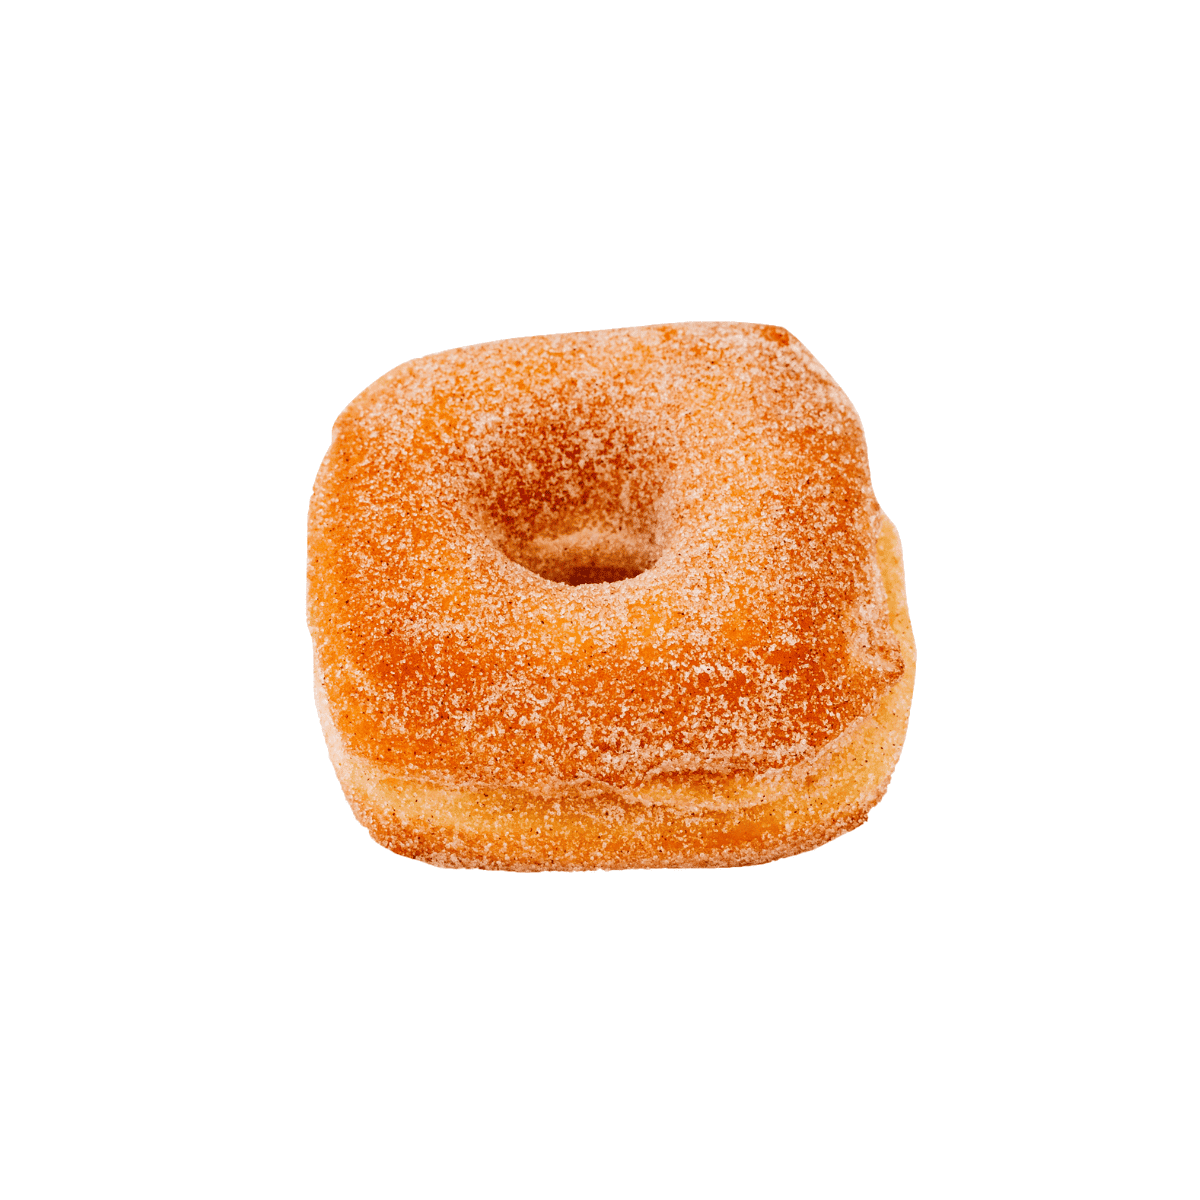 Wholesale Portal – Top Dup Donuts